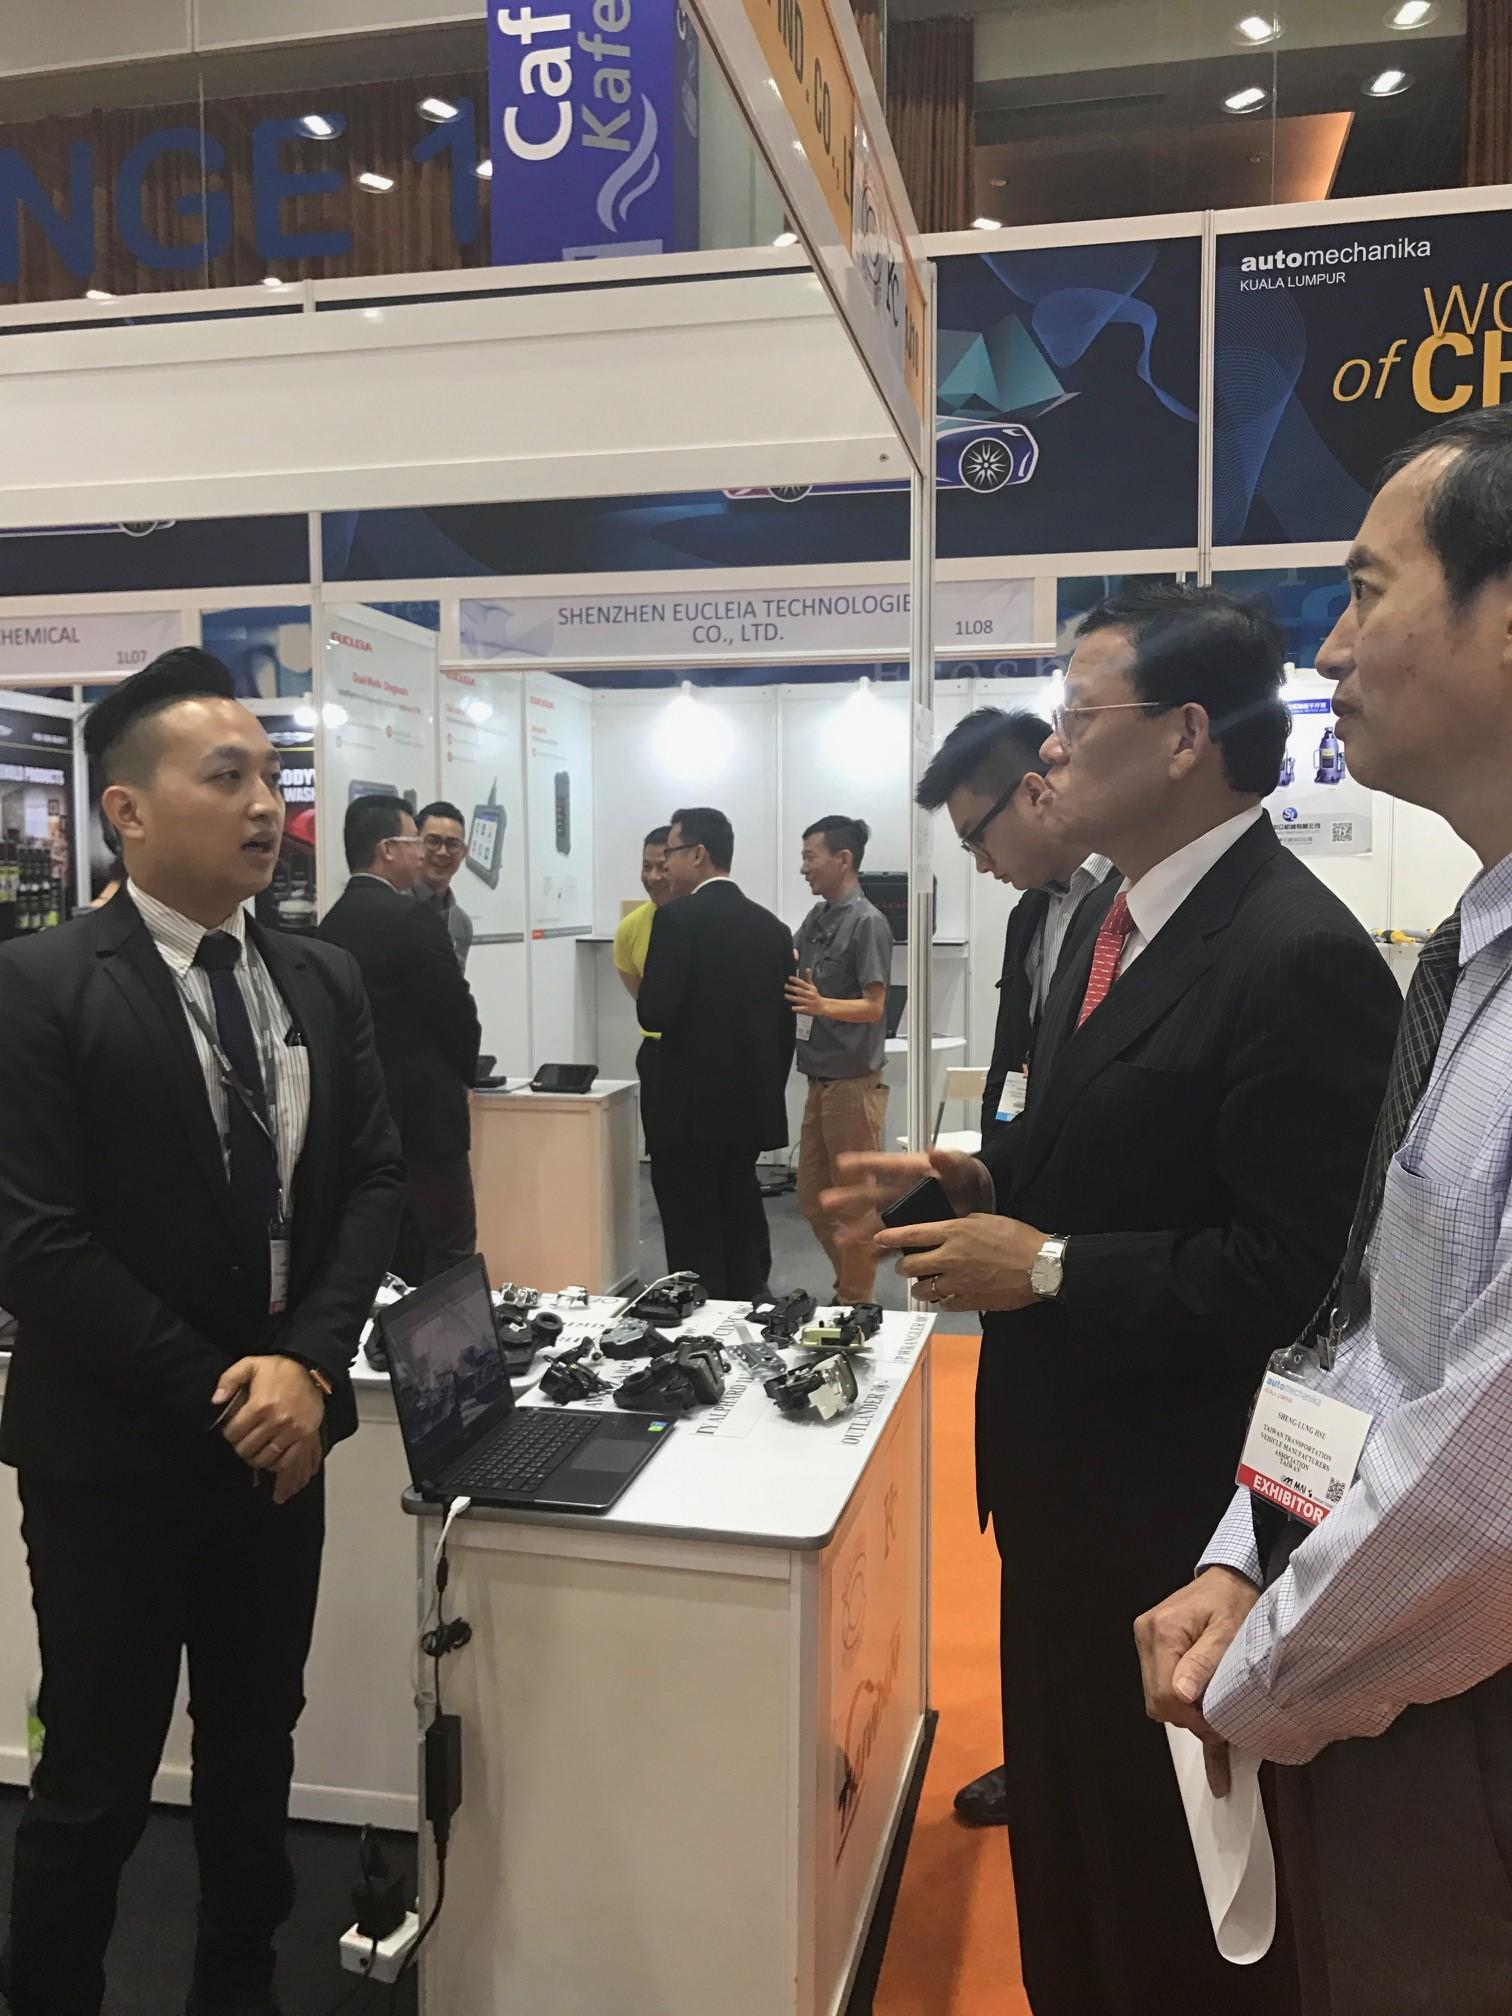  Wakil Chang, James Chi-ping melawat 2017 Automechanika Kuala Lumpur (AMKL) di Kuala Lumpur Convention Centre (KLCC) pada Mac 24, 2017.
